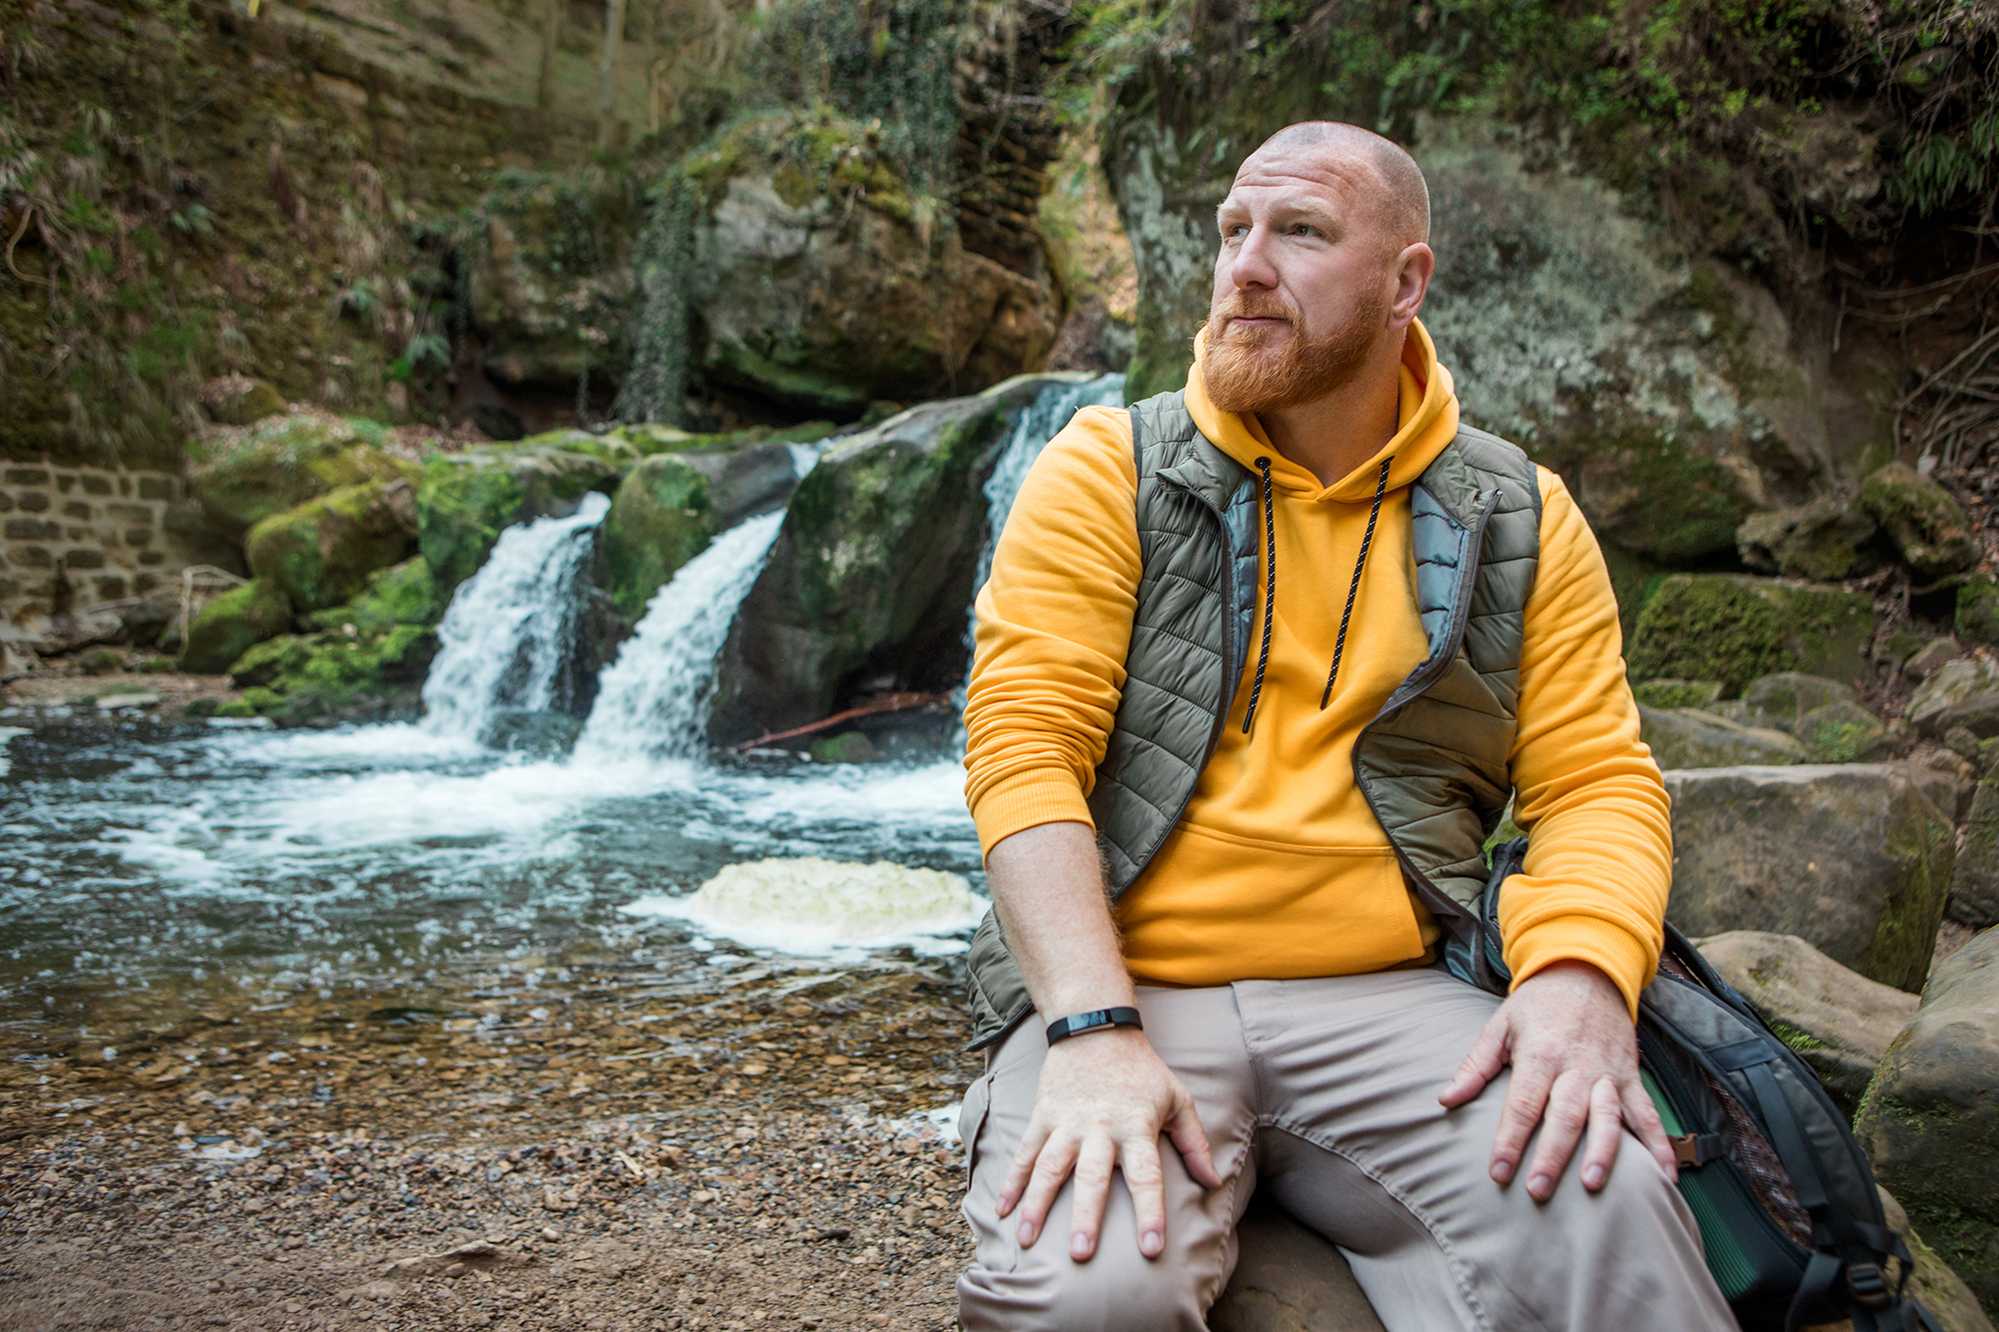 Man with beard sits on rock near waterfalls